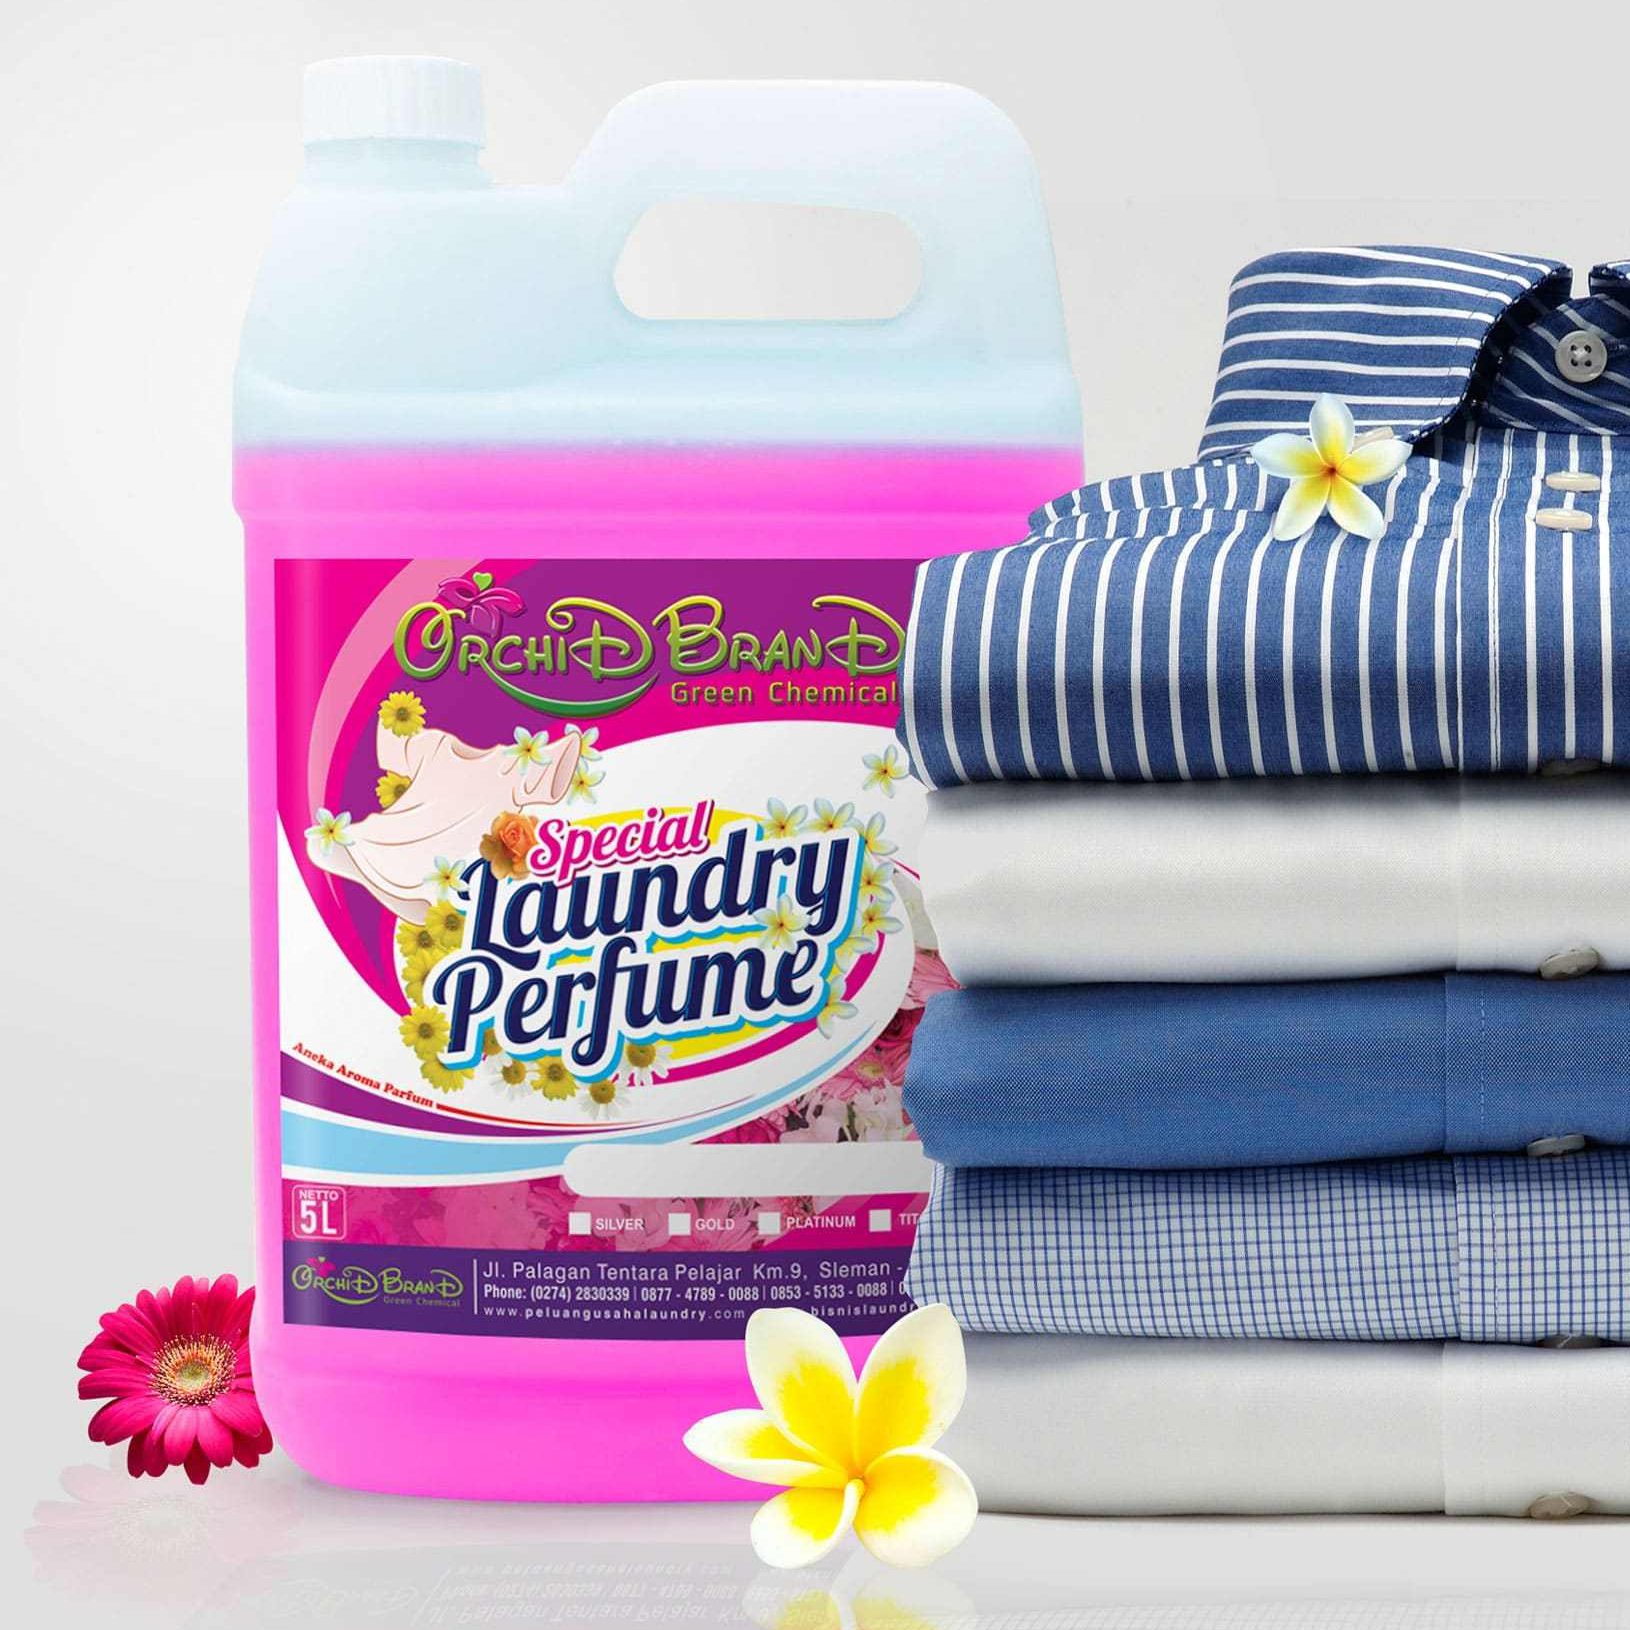 parfum laundry